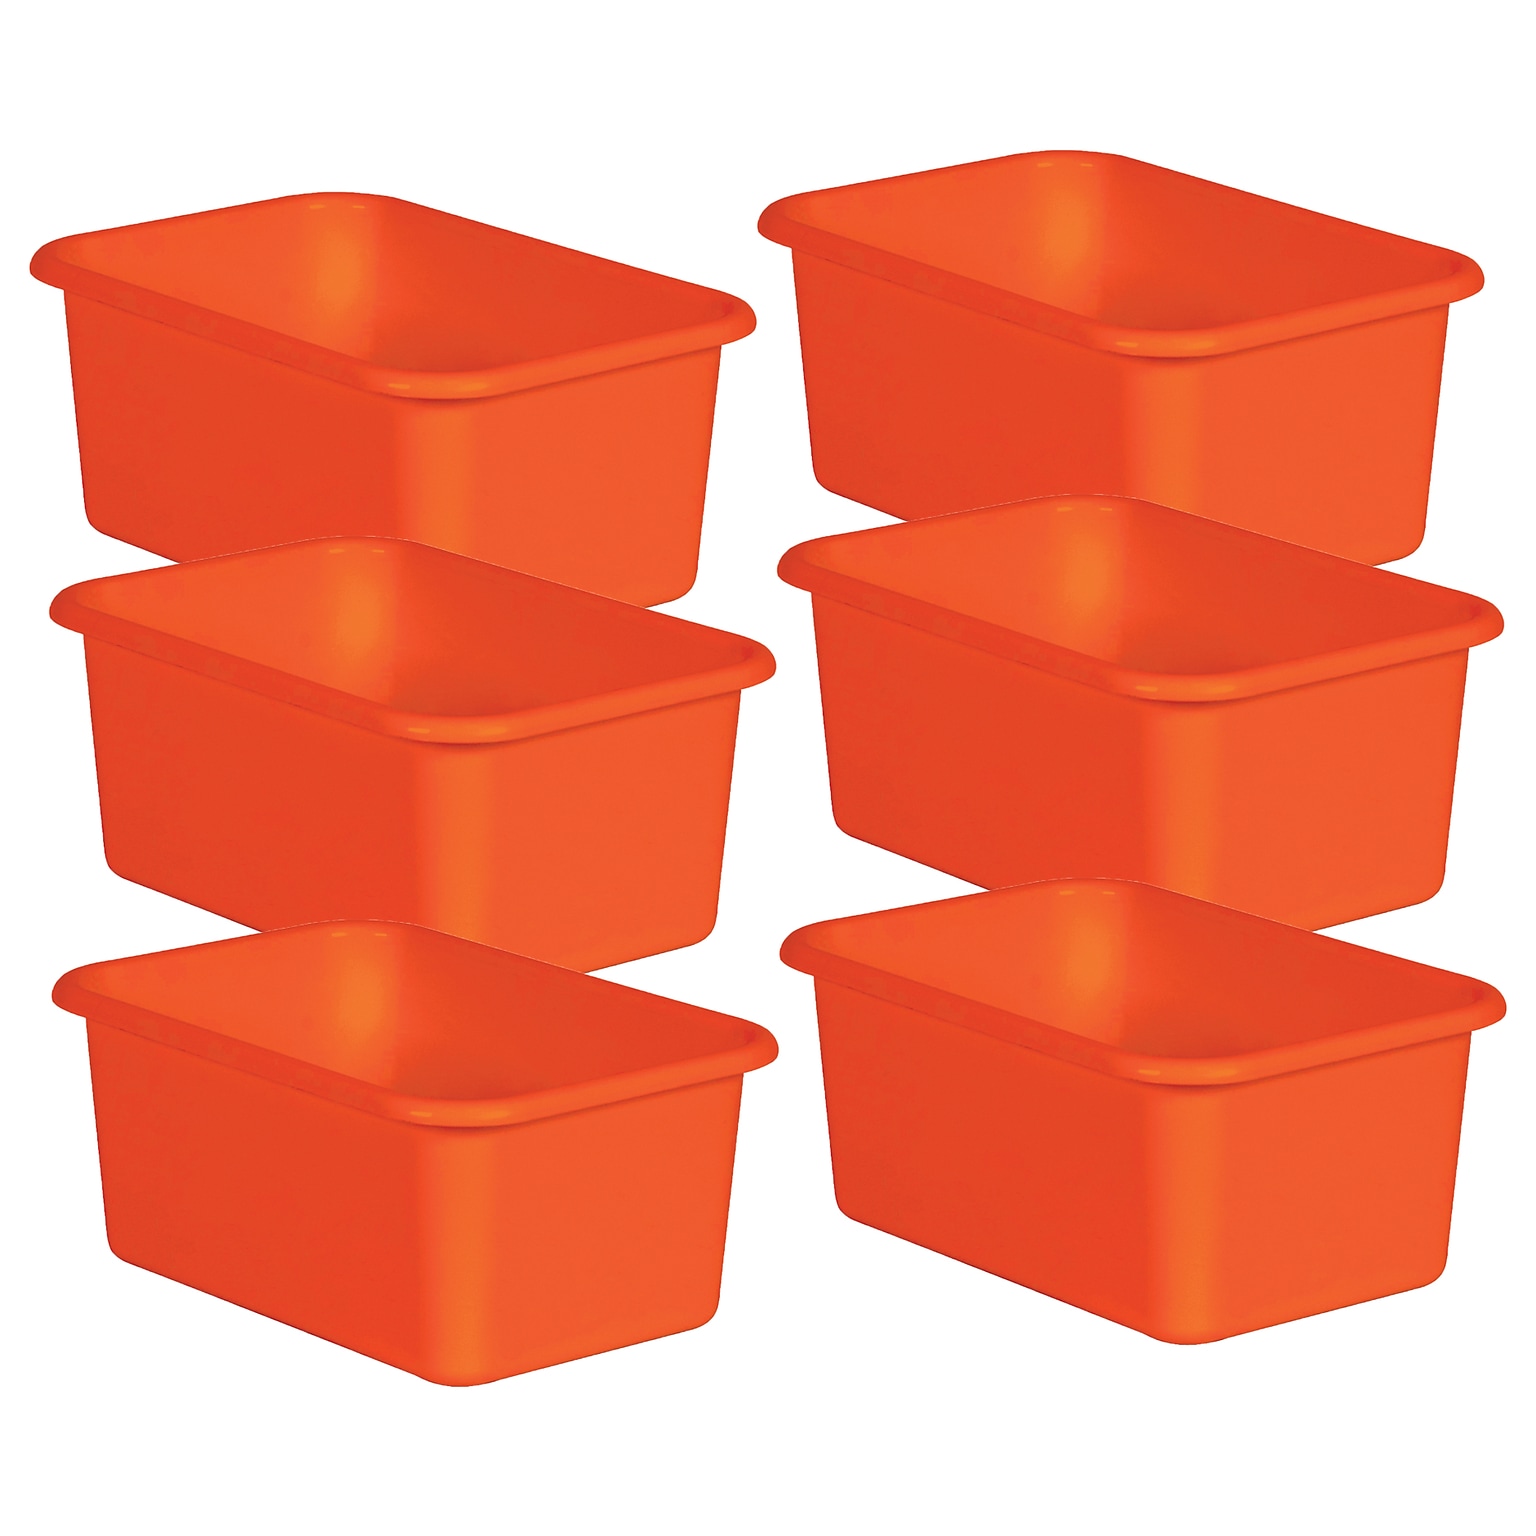 Teacher Created Resources® Plastic Storage Bin, Small, 7.75 x 11.38 x 5 , Orange, Pack of 6 (TCR20394-6)